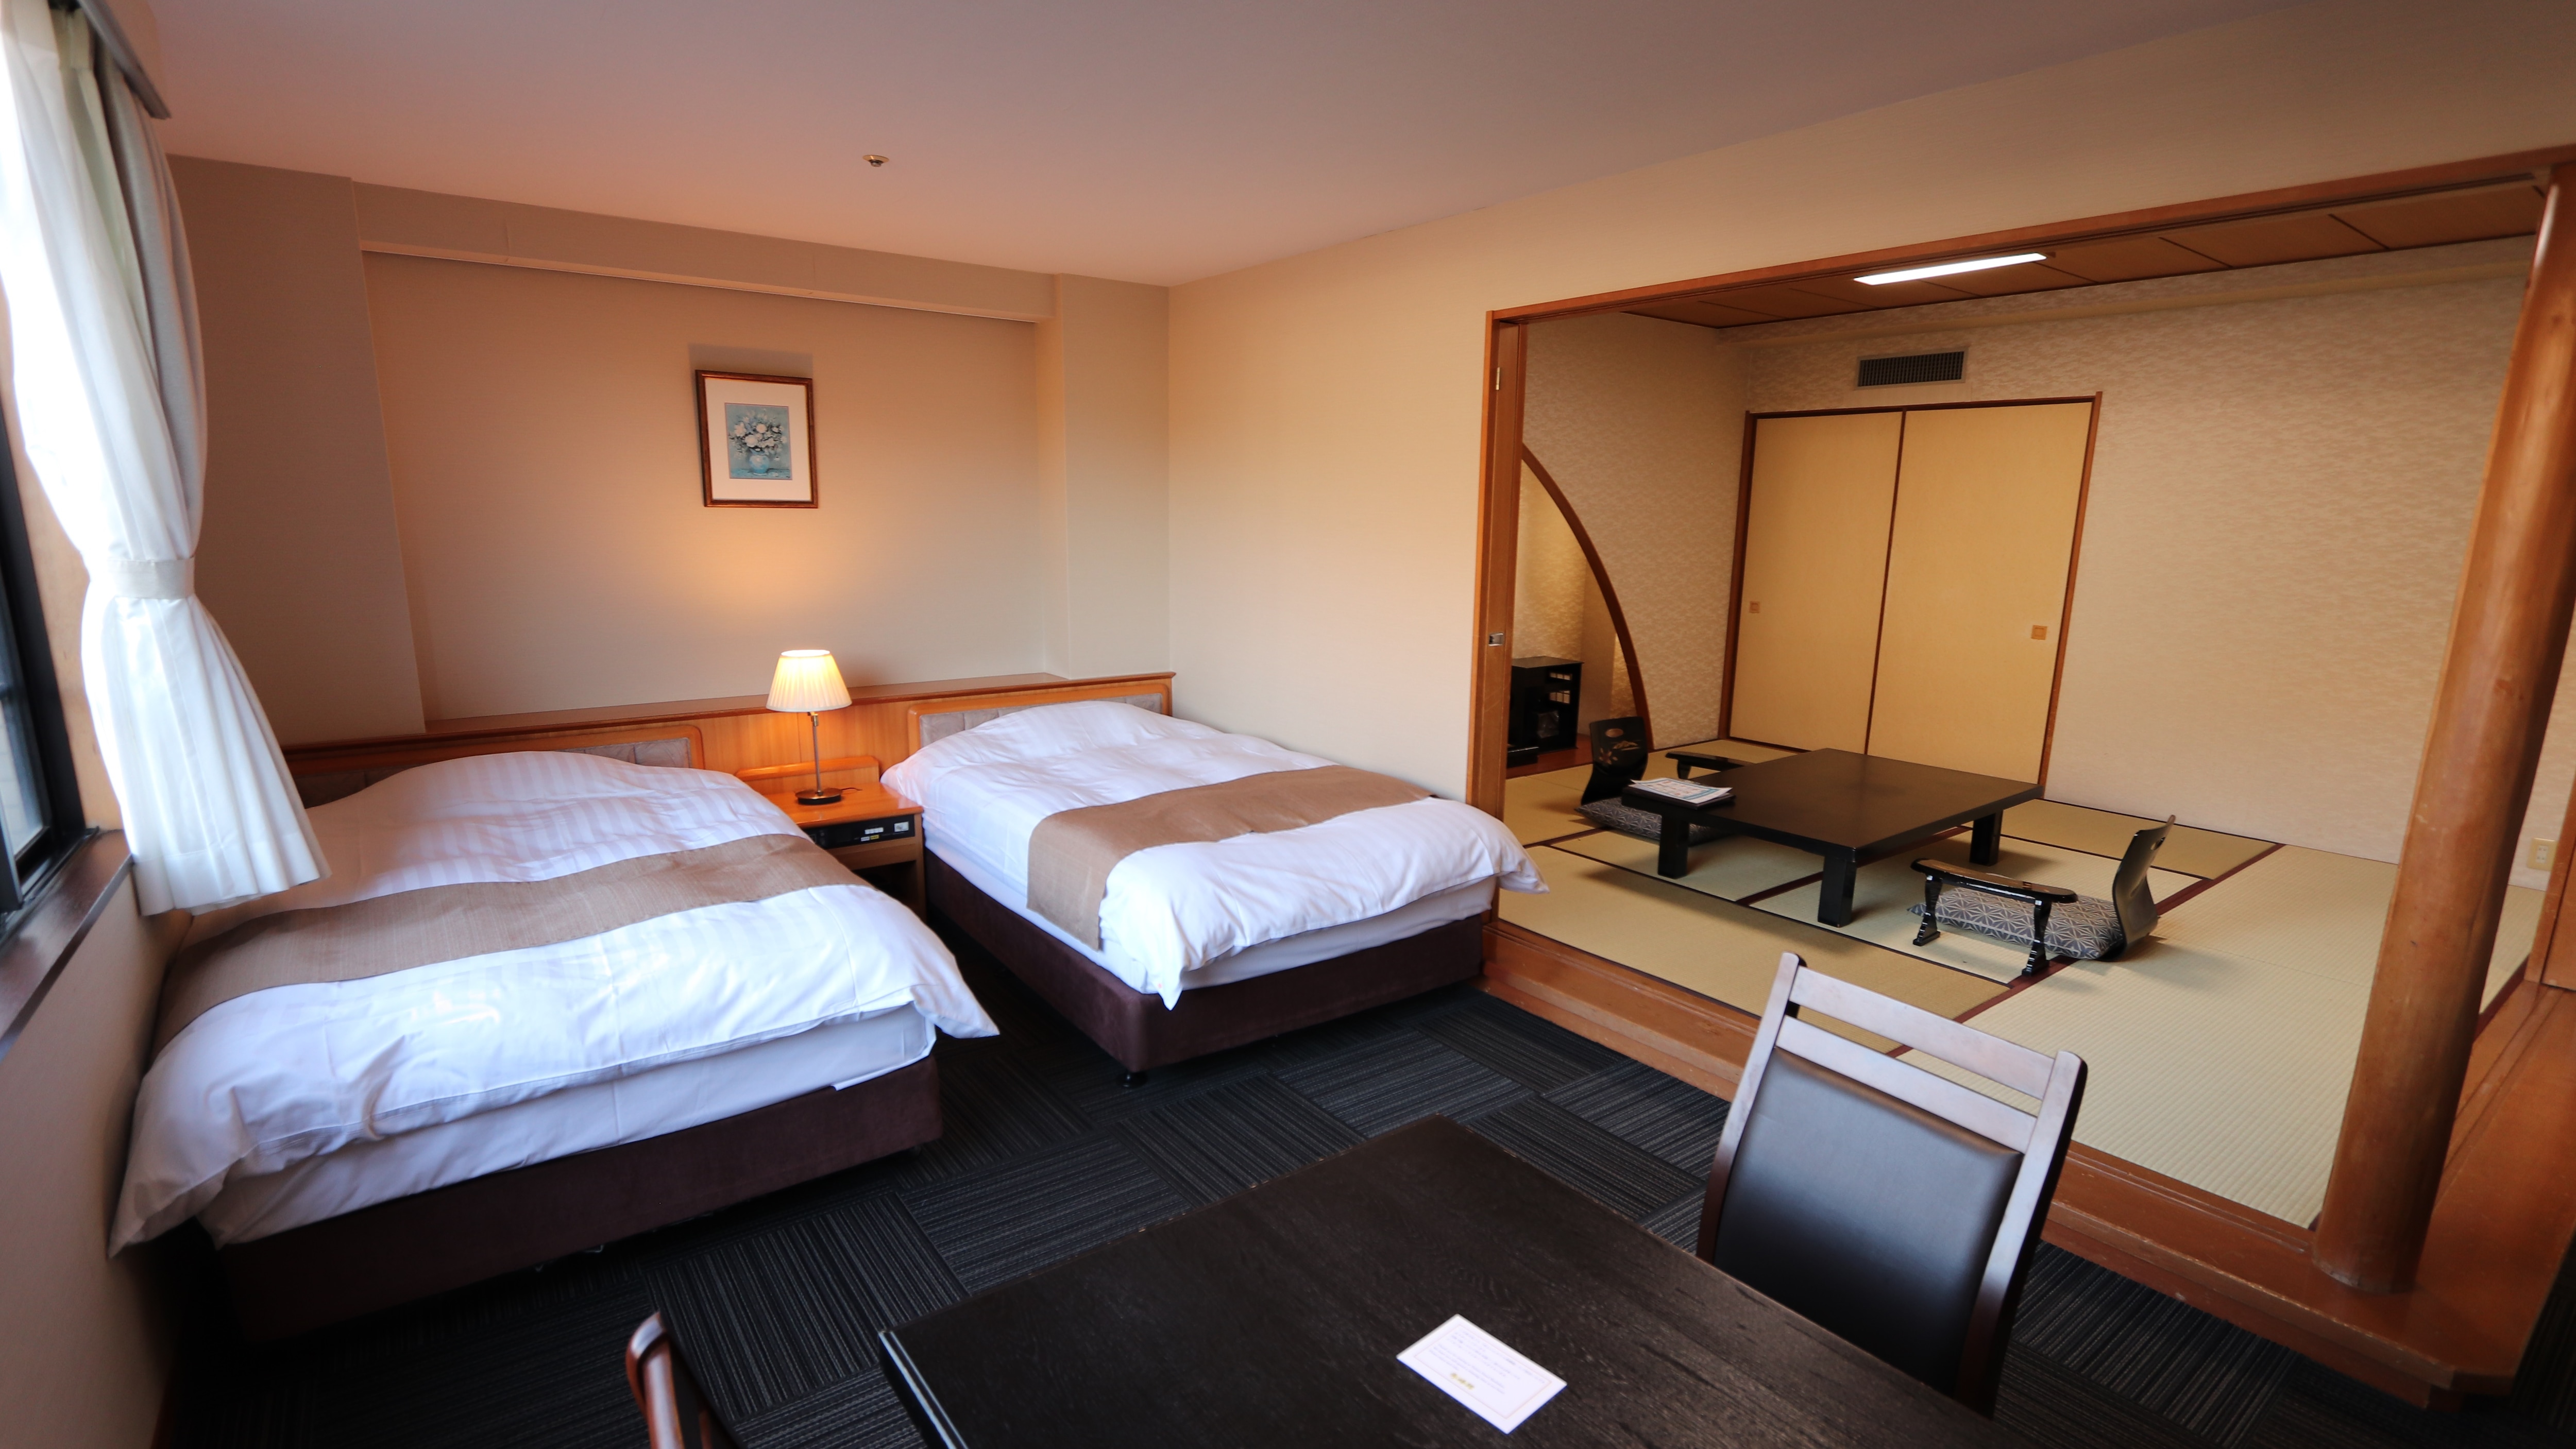 [Room] Japanese-Western style room